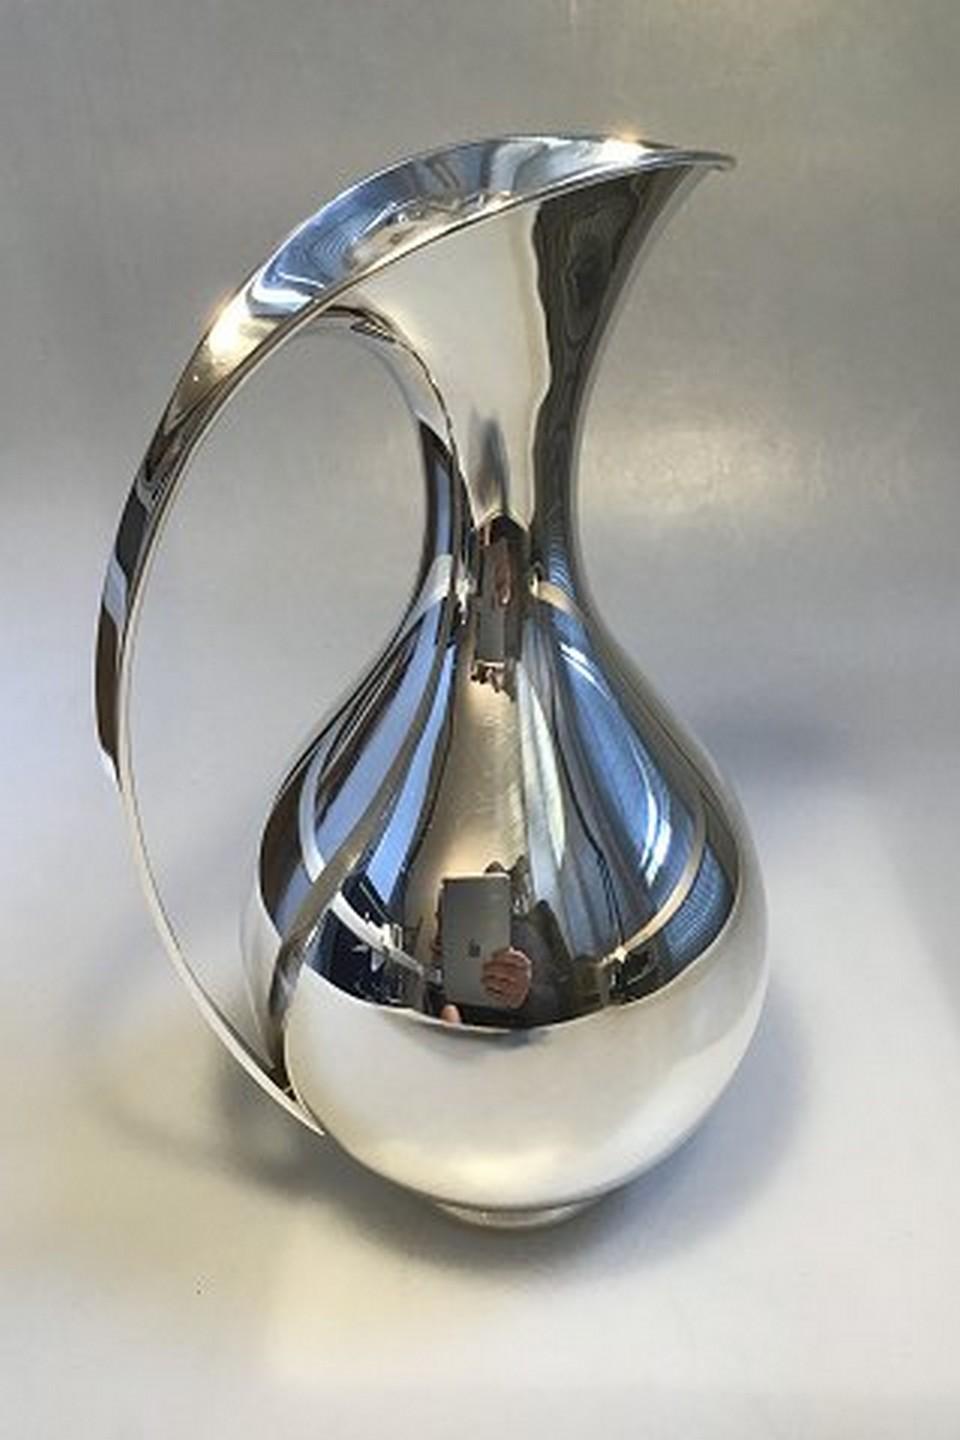 Kay Fisker Anton Michelsen sterling silver pitcher. 
Measures: 26.5 cm / 10 7/16 in. 
Weighs 773 g / 27.27 oz.
Item no.: 450572.
  